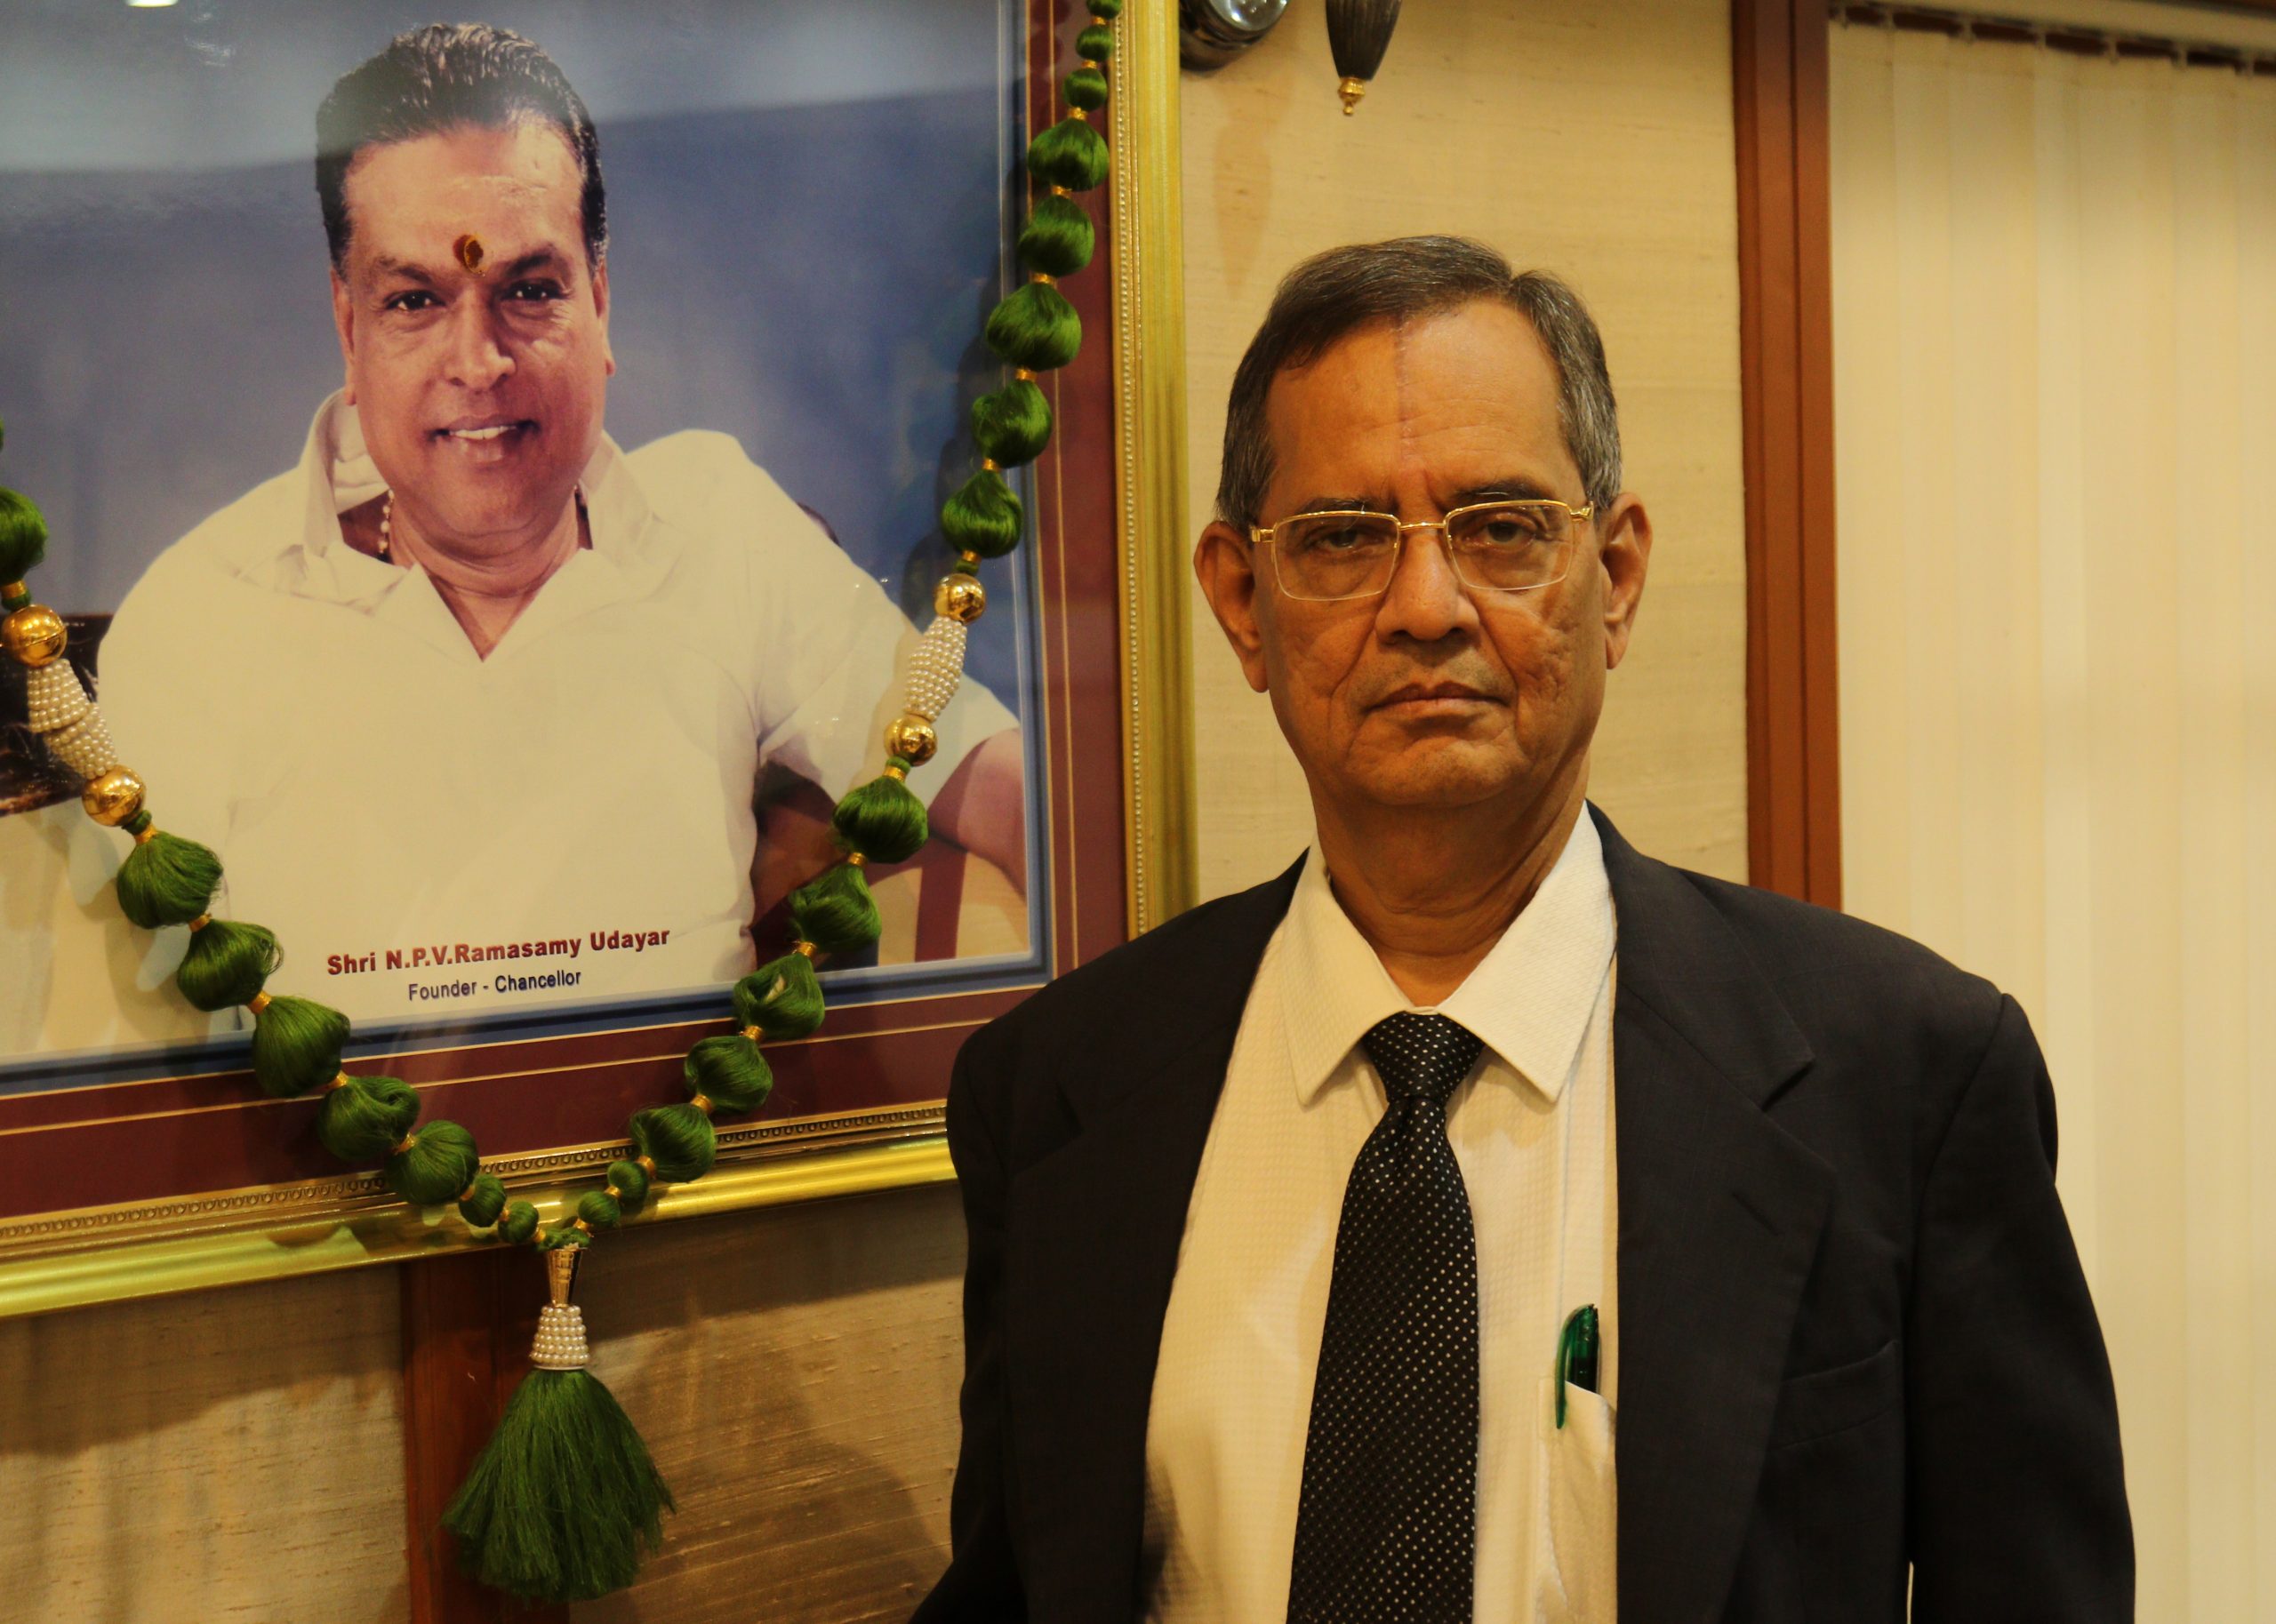 Dr. Prof. PV Vijayaraghavan